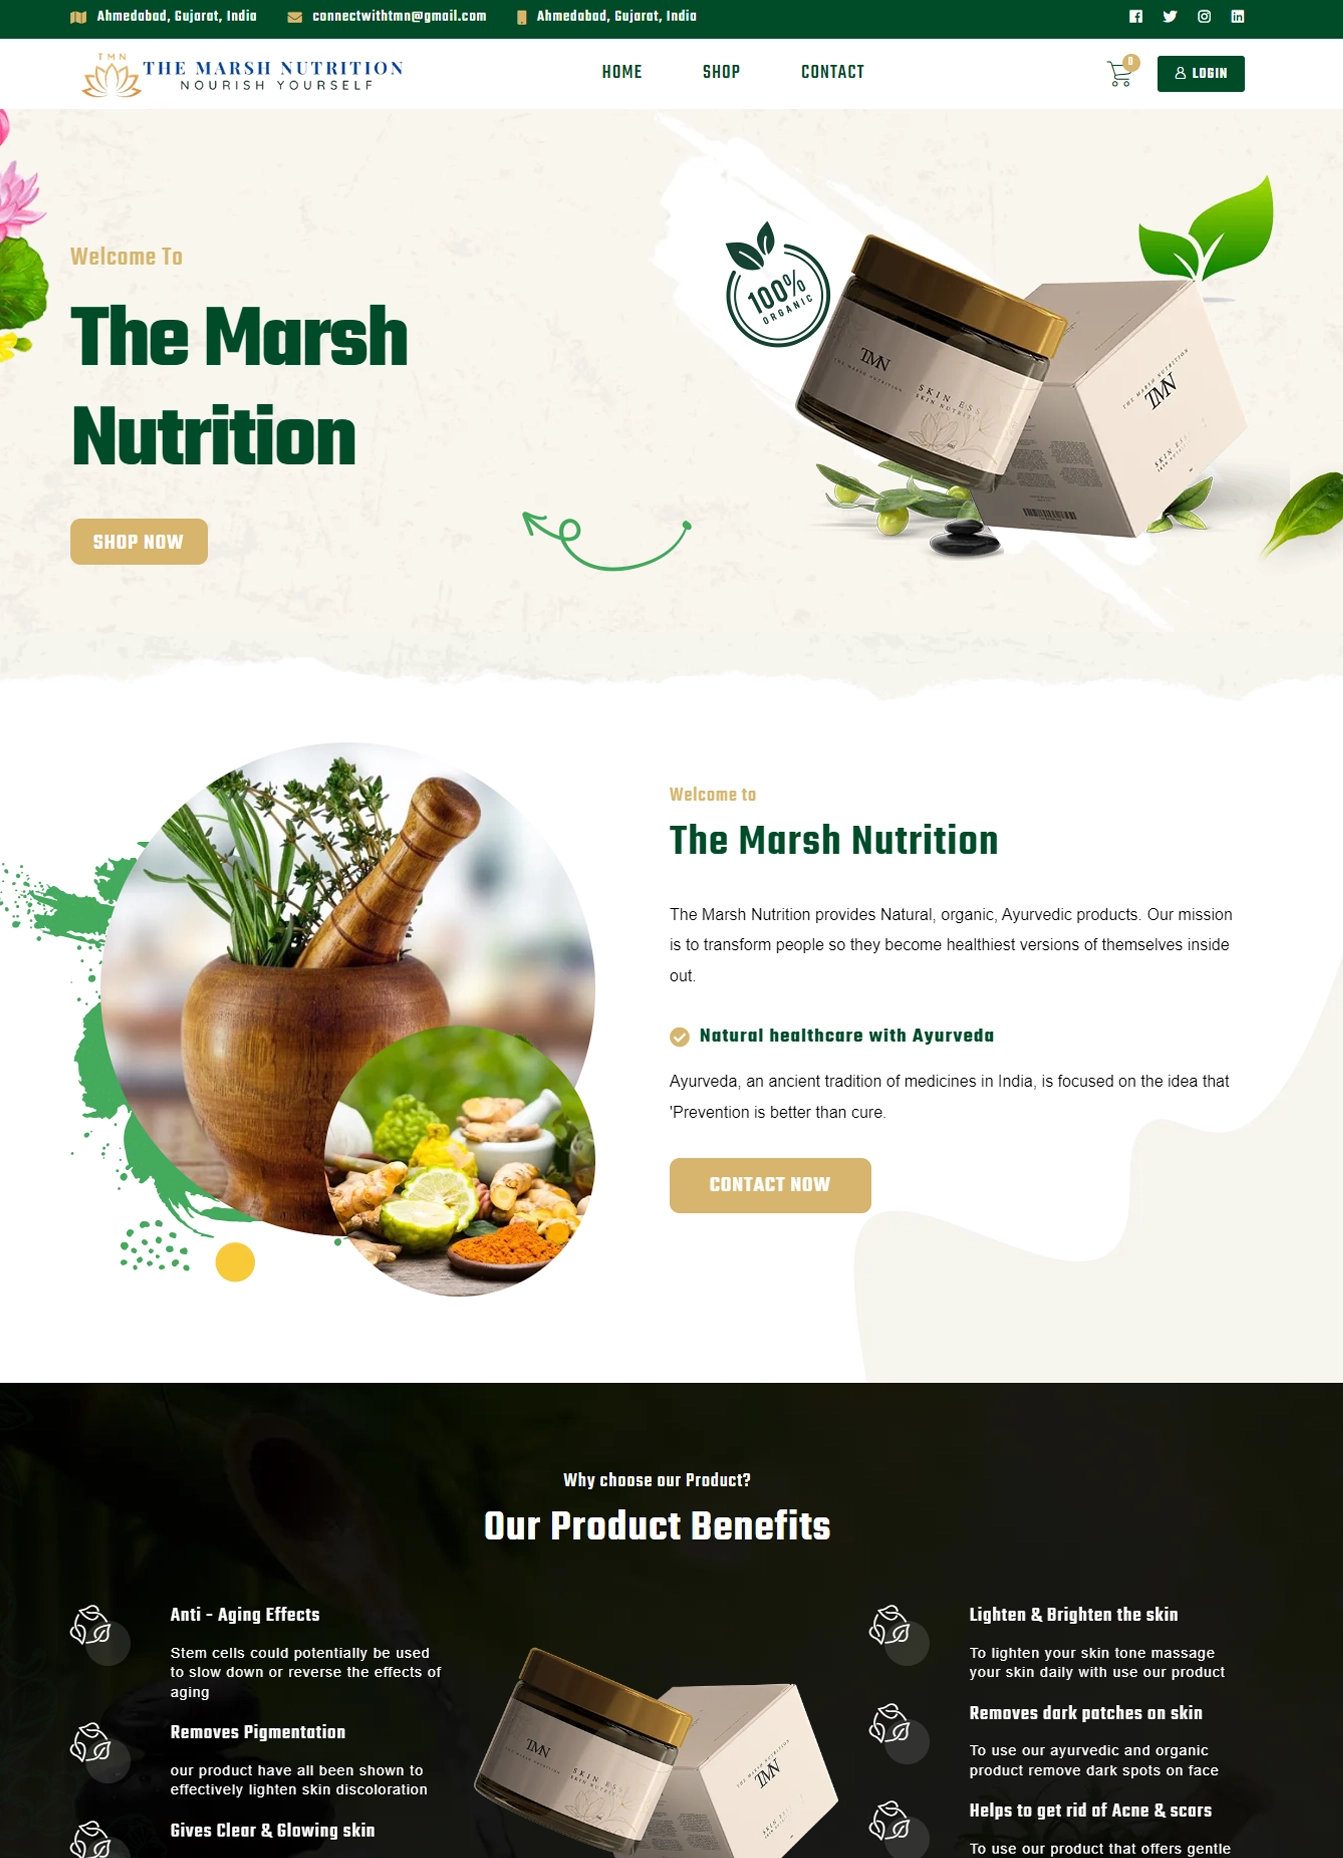 The Marsh Nutrition